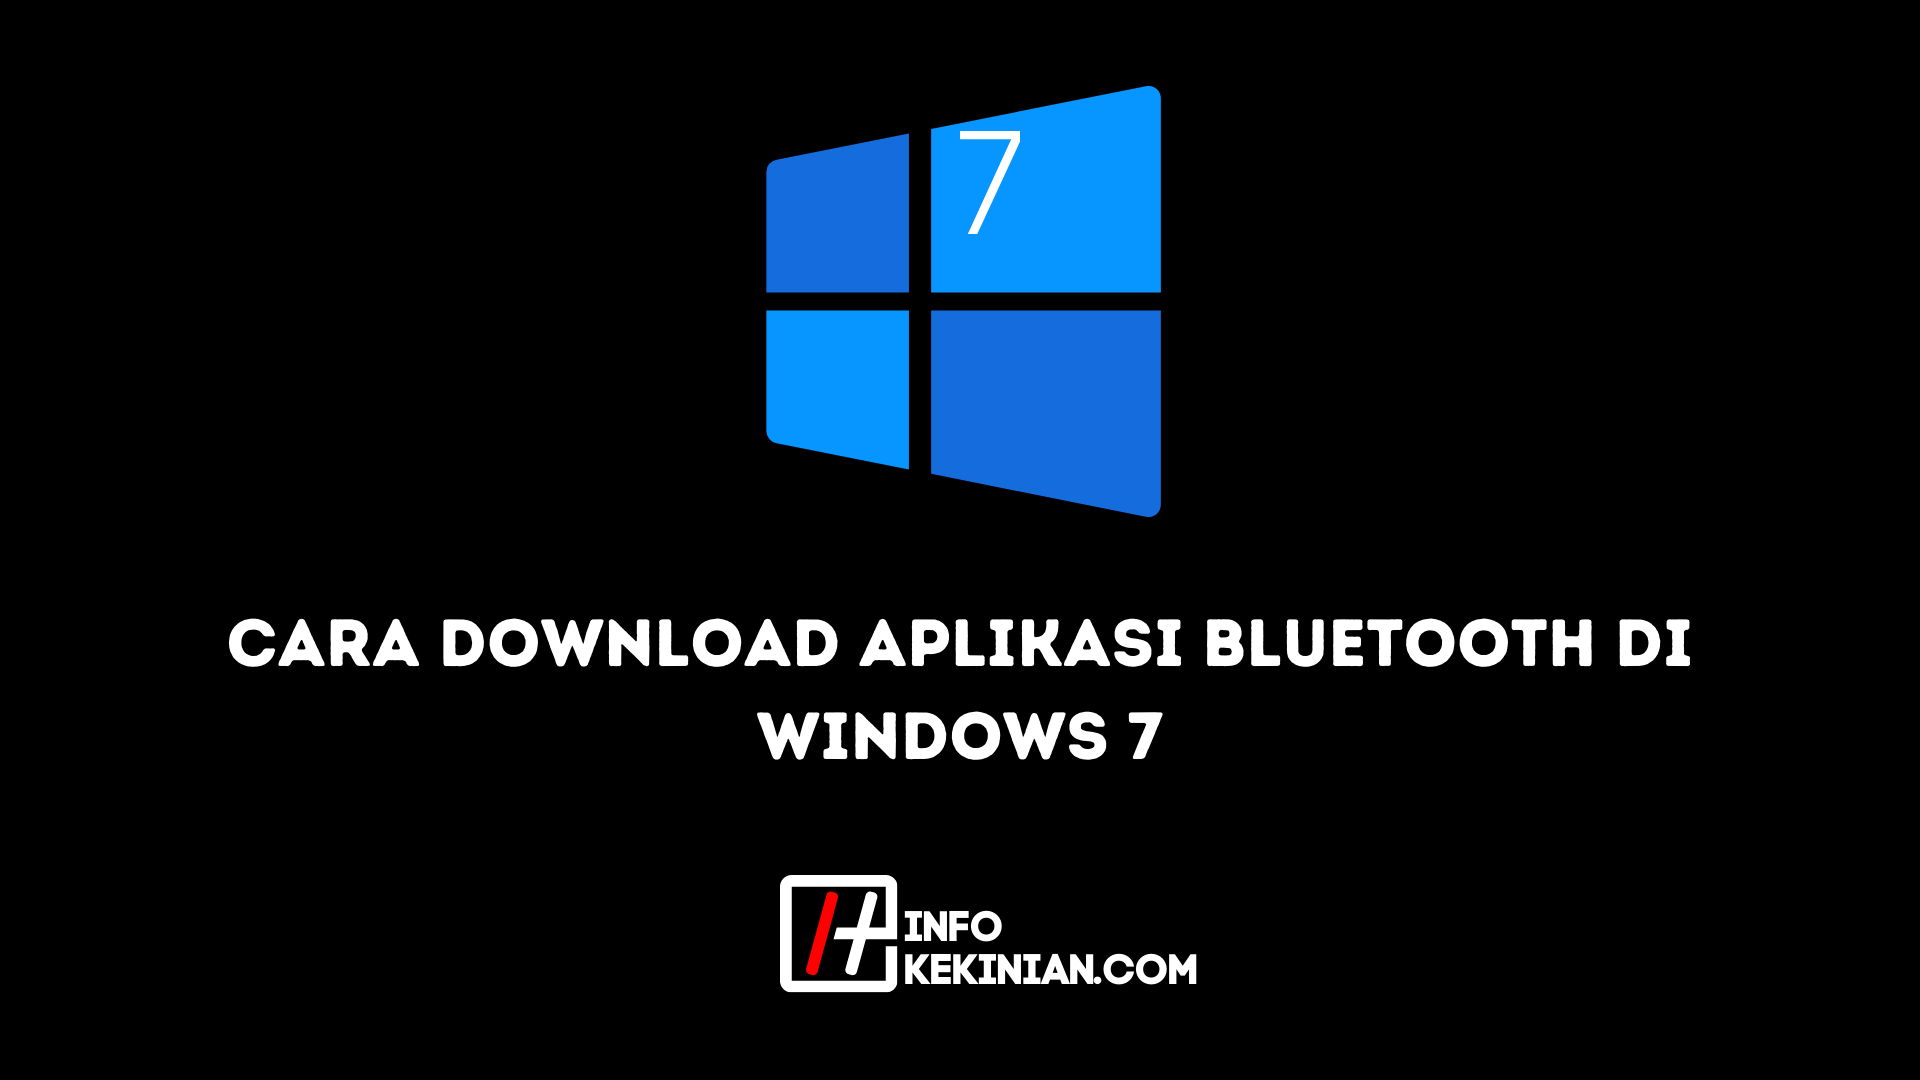 Cara Download Aplikasi Bluetooth di Windows 7